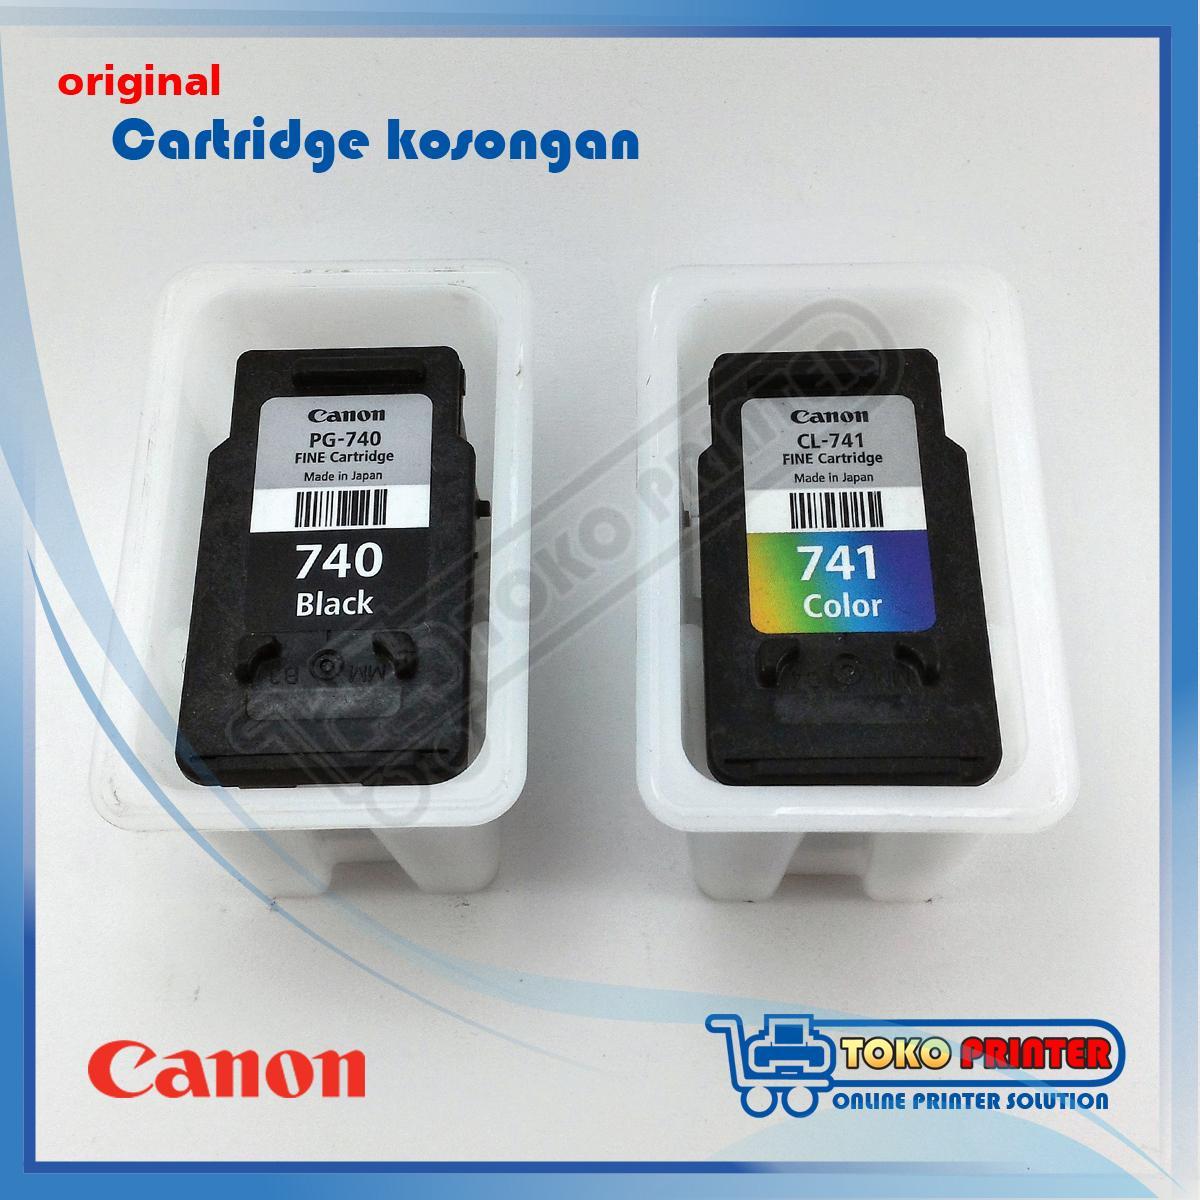 Cartridge Kosongan Canon PG-740 & CL-741